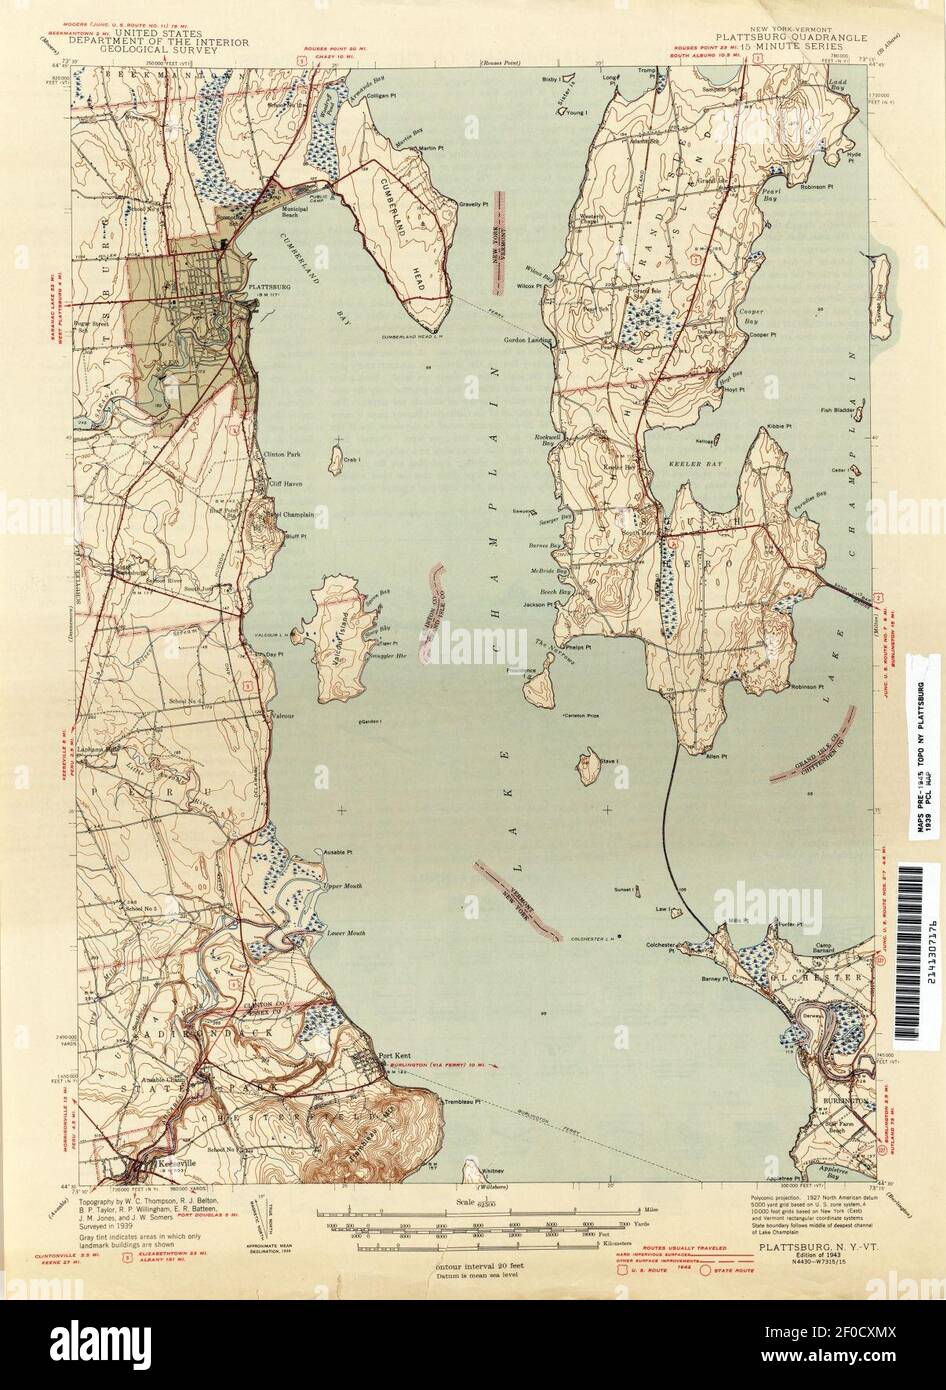 Plattsburg New York USGS topo map 1939. Stock Photo